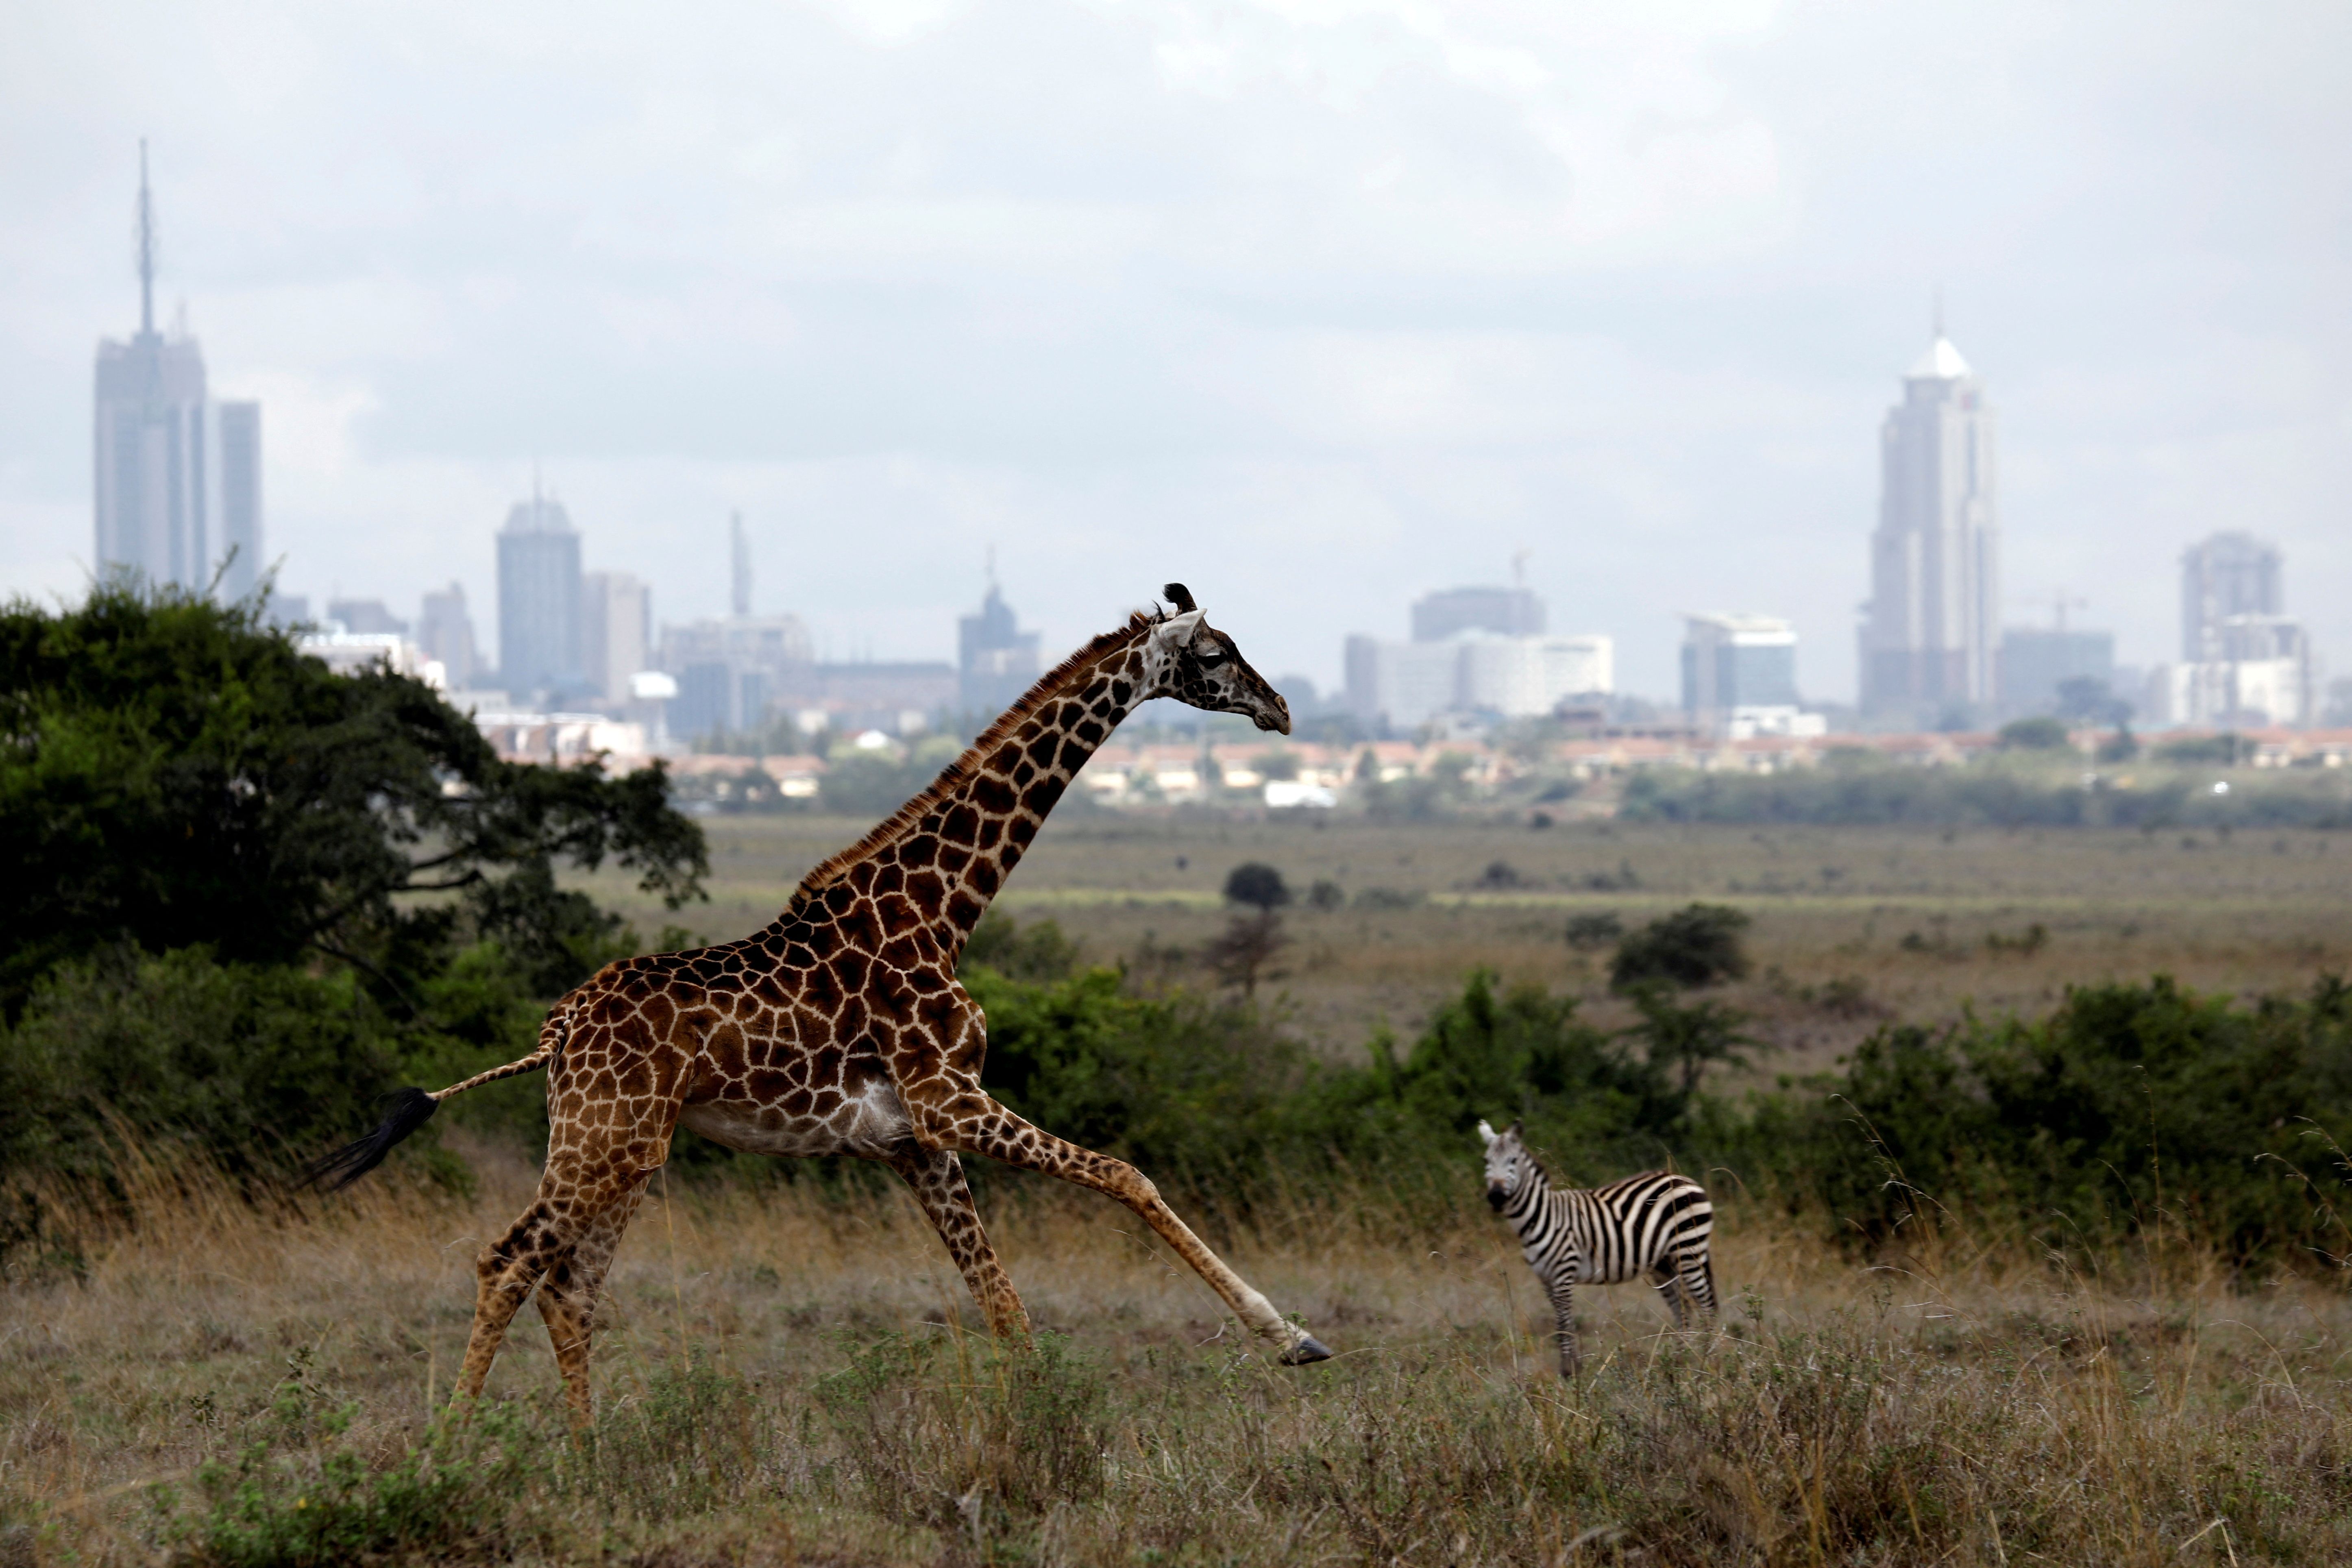 The Nairobi skyline is seen in the background as a giraffe runs through the Nairobi National Park, near Nairobi